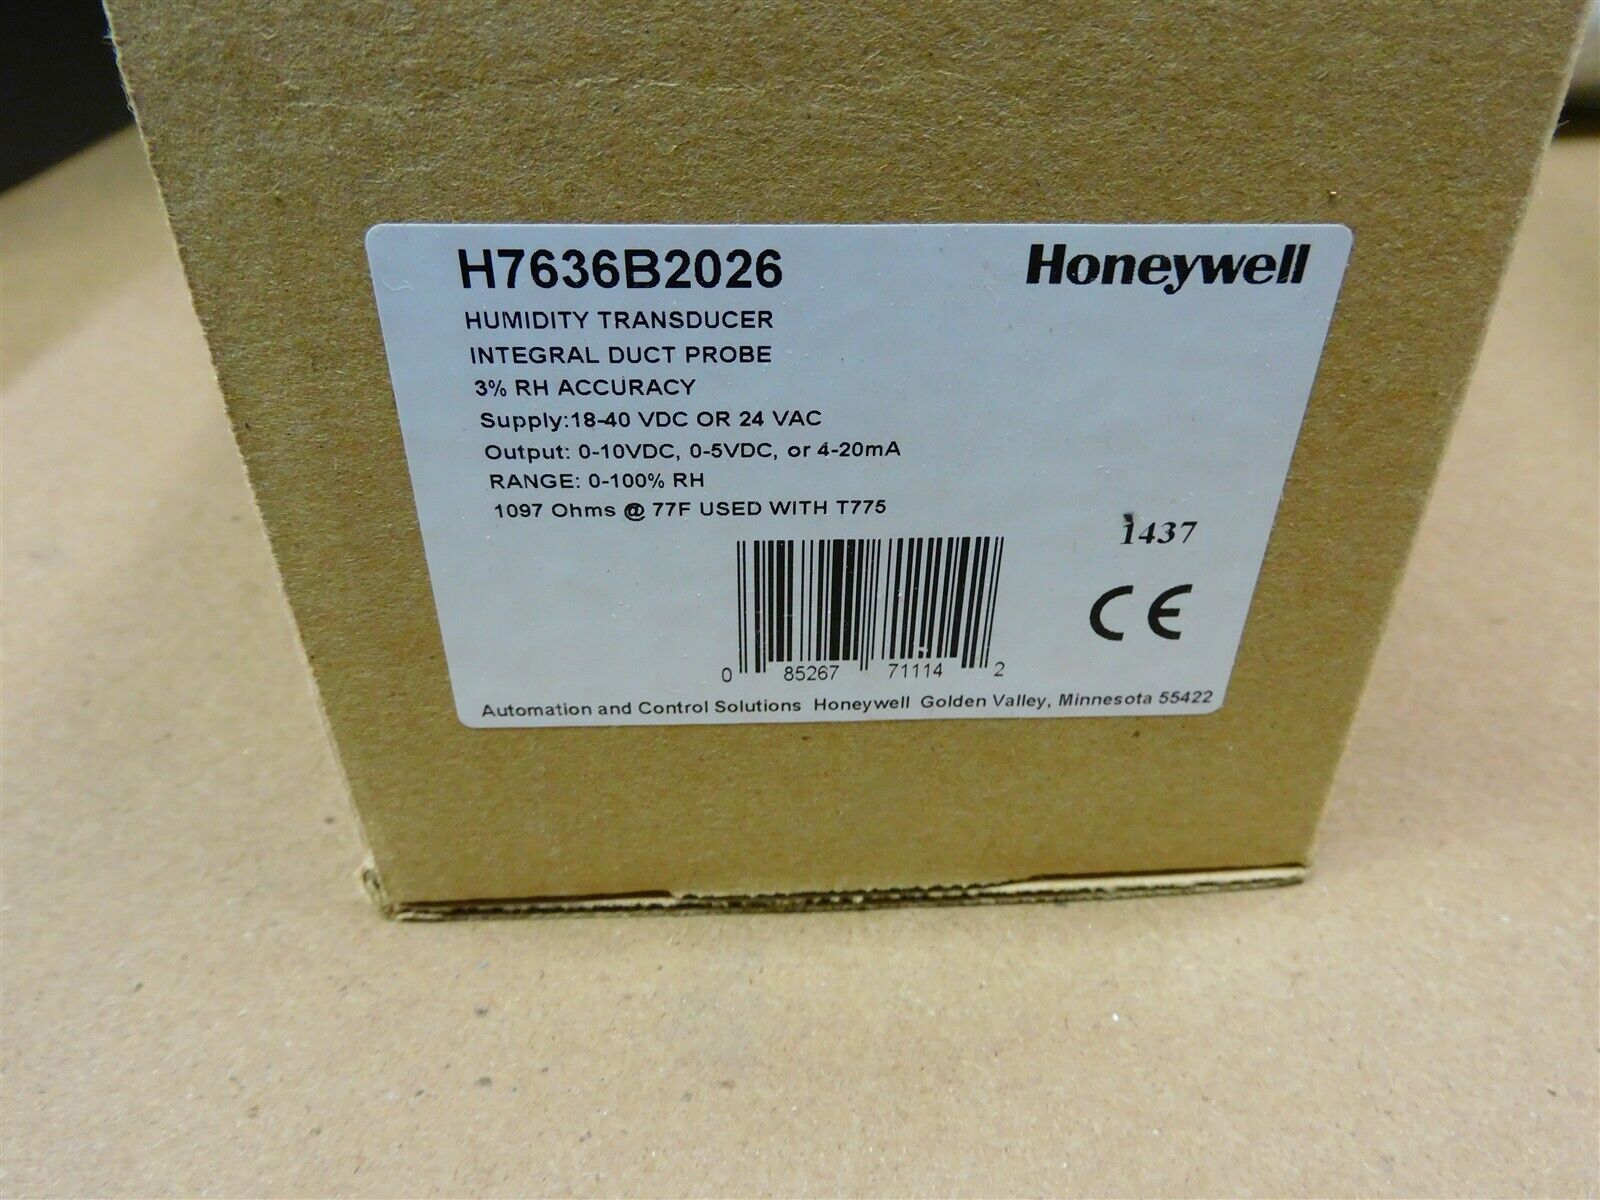 Honeywell H7636B2026 Humidity Transducer NEW in box